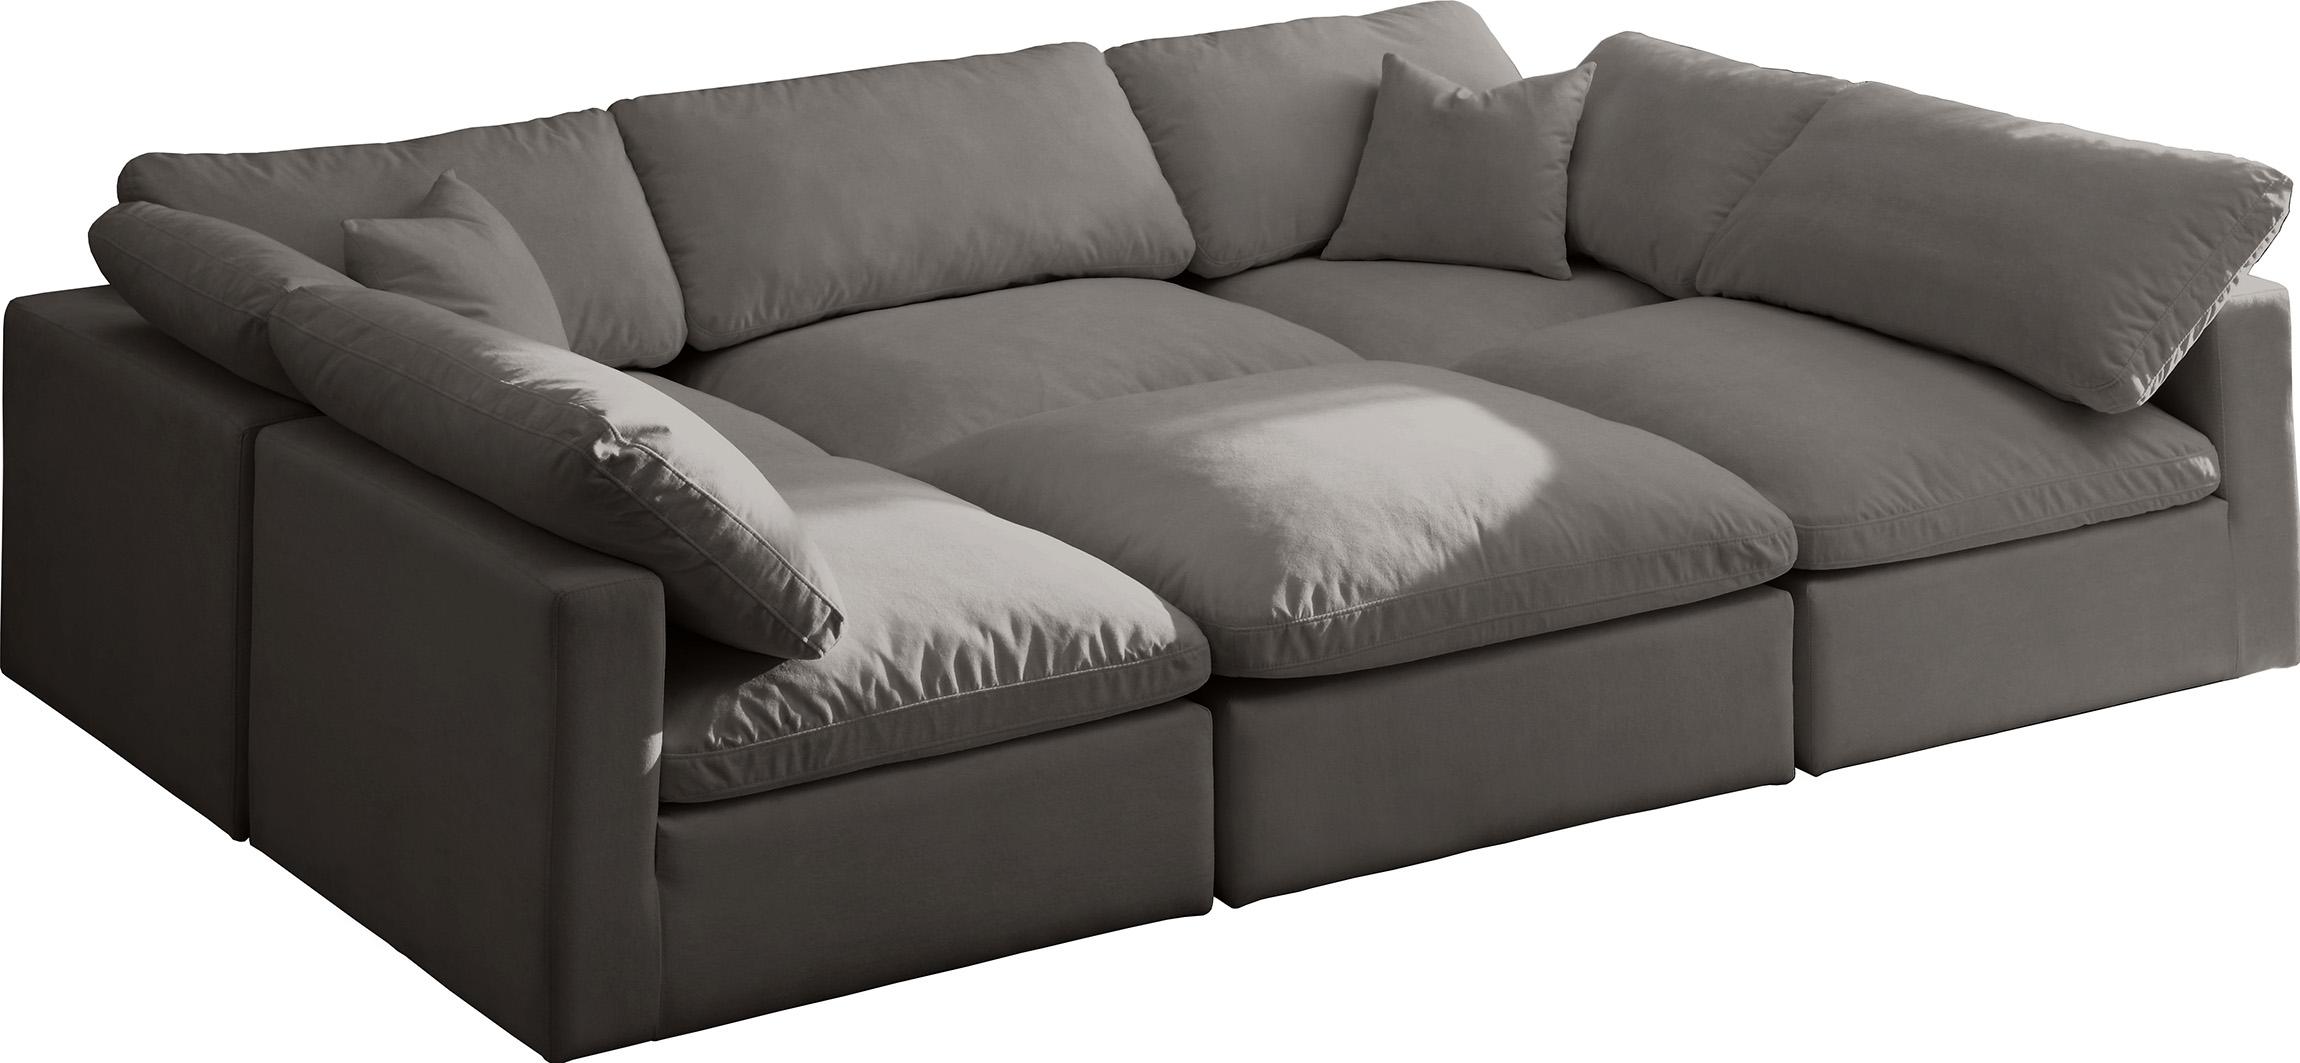 Contemporary, Modern Modular Sectional Sofa Cloud GREY GREY-Sec-Cloud in Gray Fabric